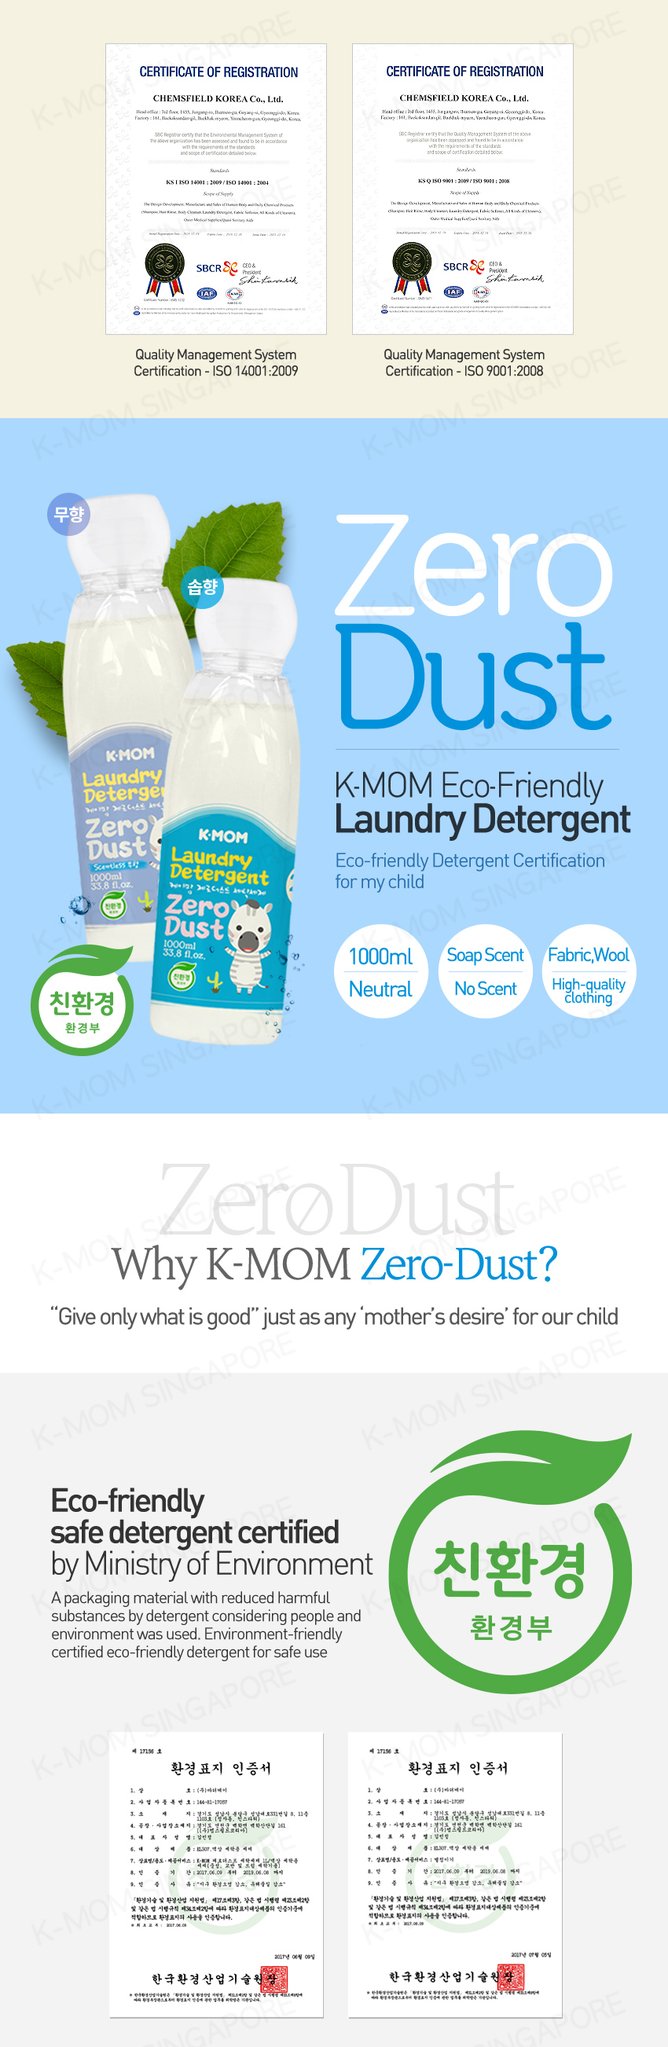 K-MOM_Zero-Dust-Laundry_4_2048x2048.jpg